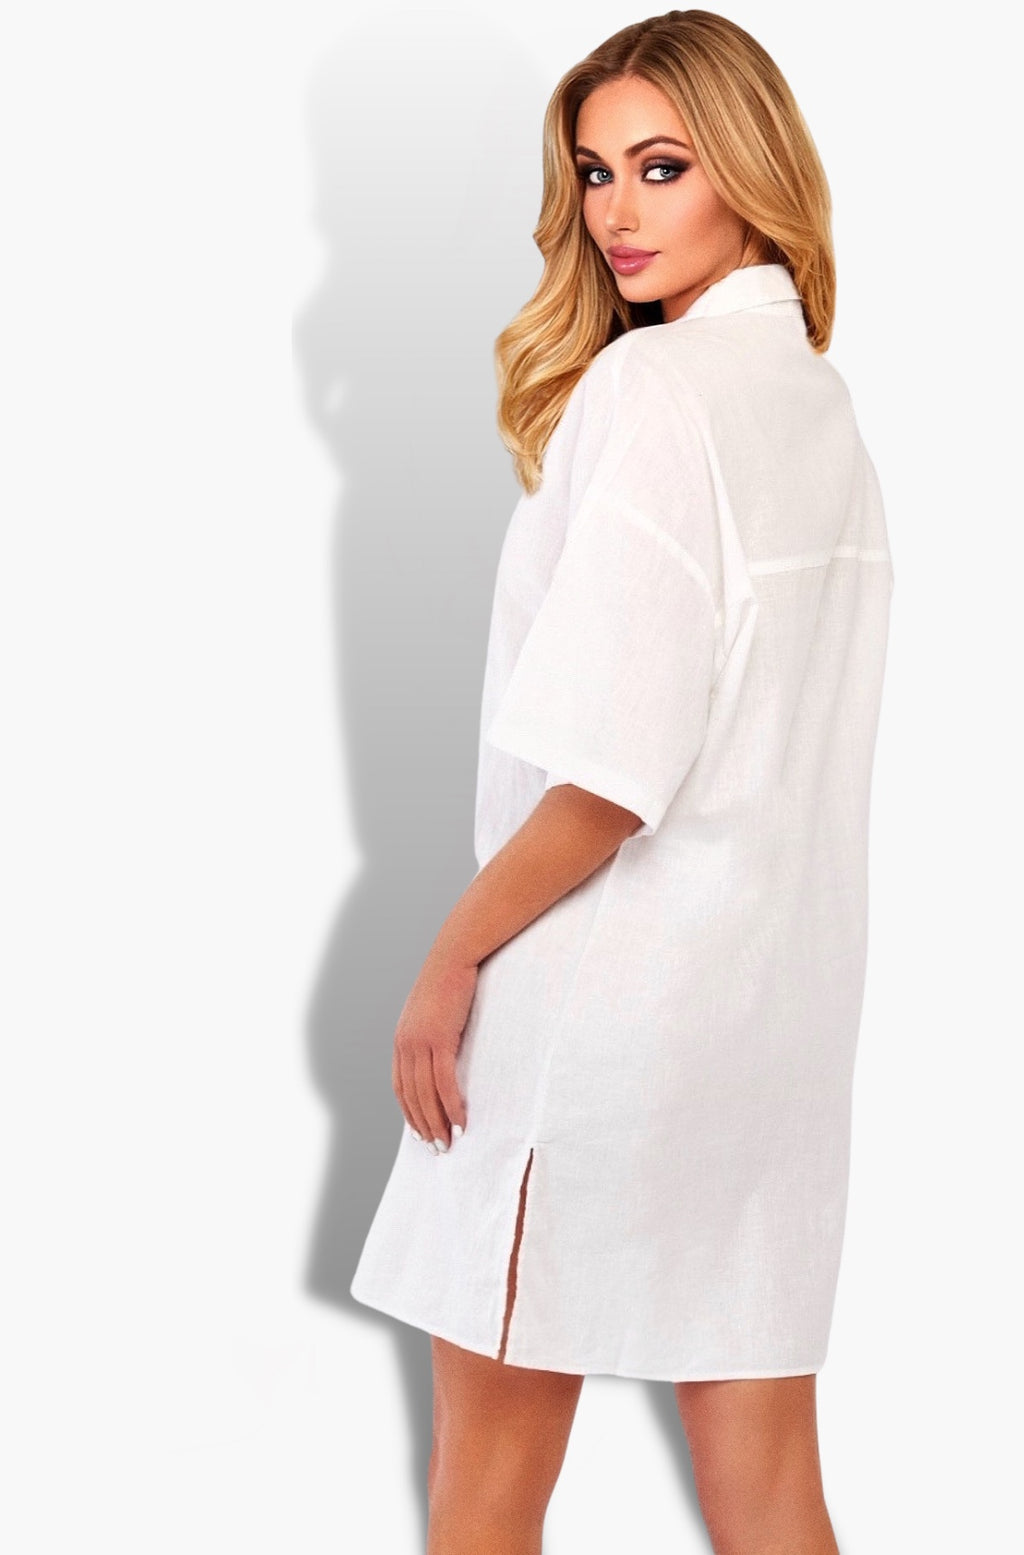 Cotton Mini Shirt Dress For Women (Off White)